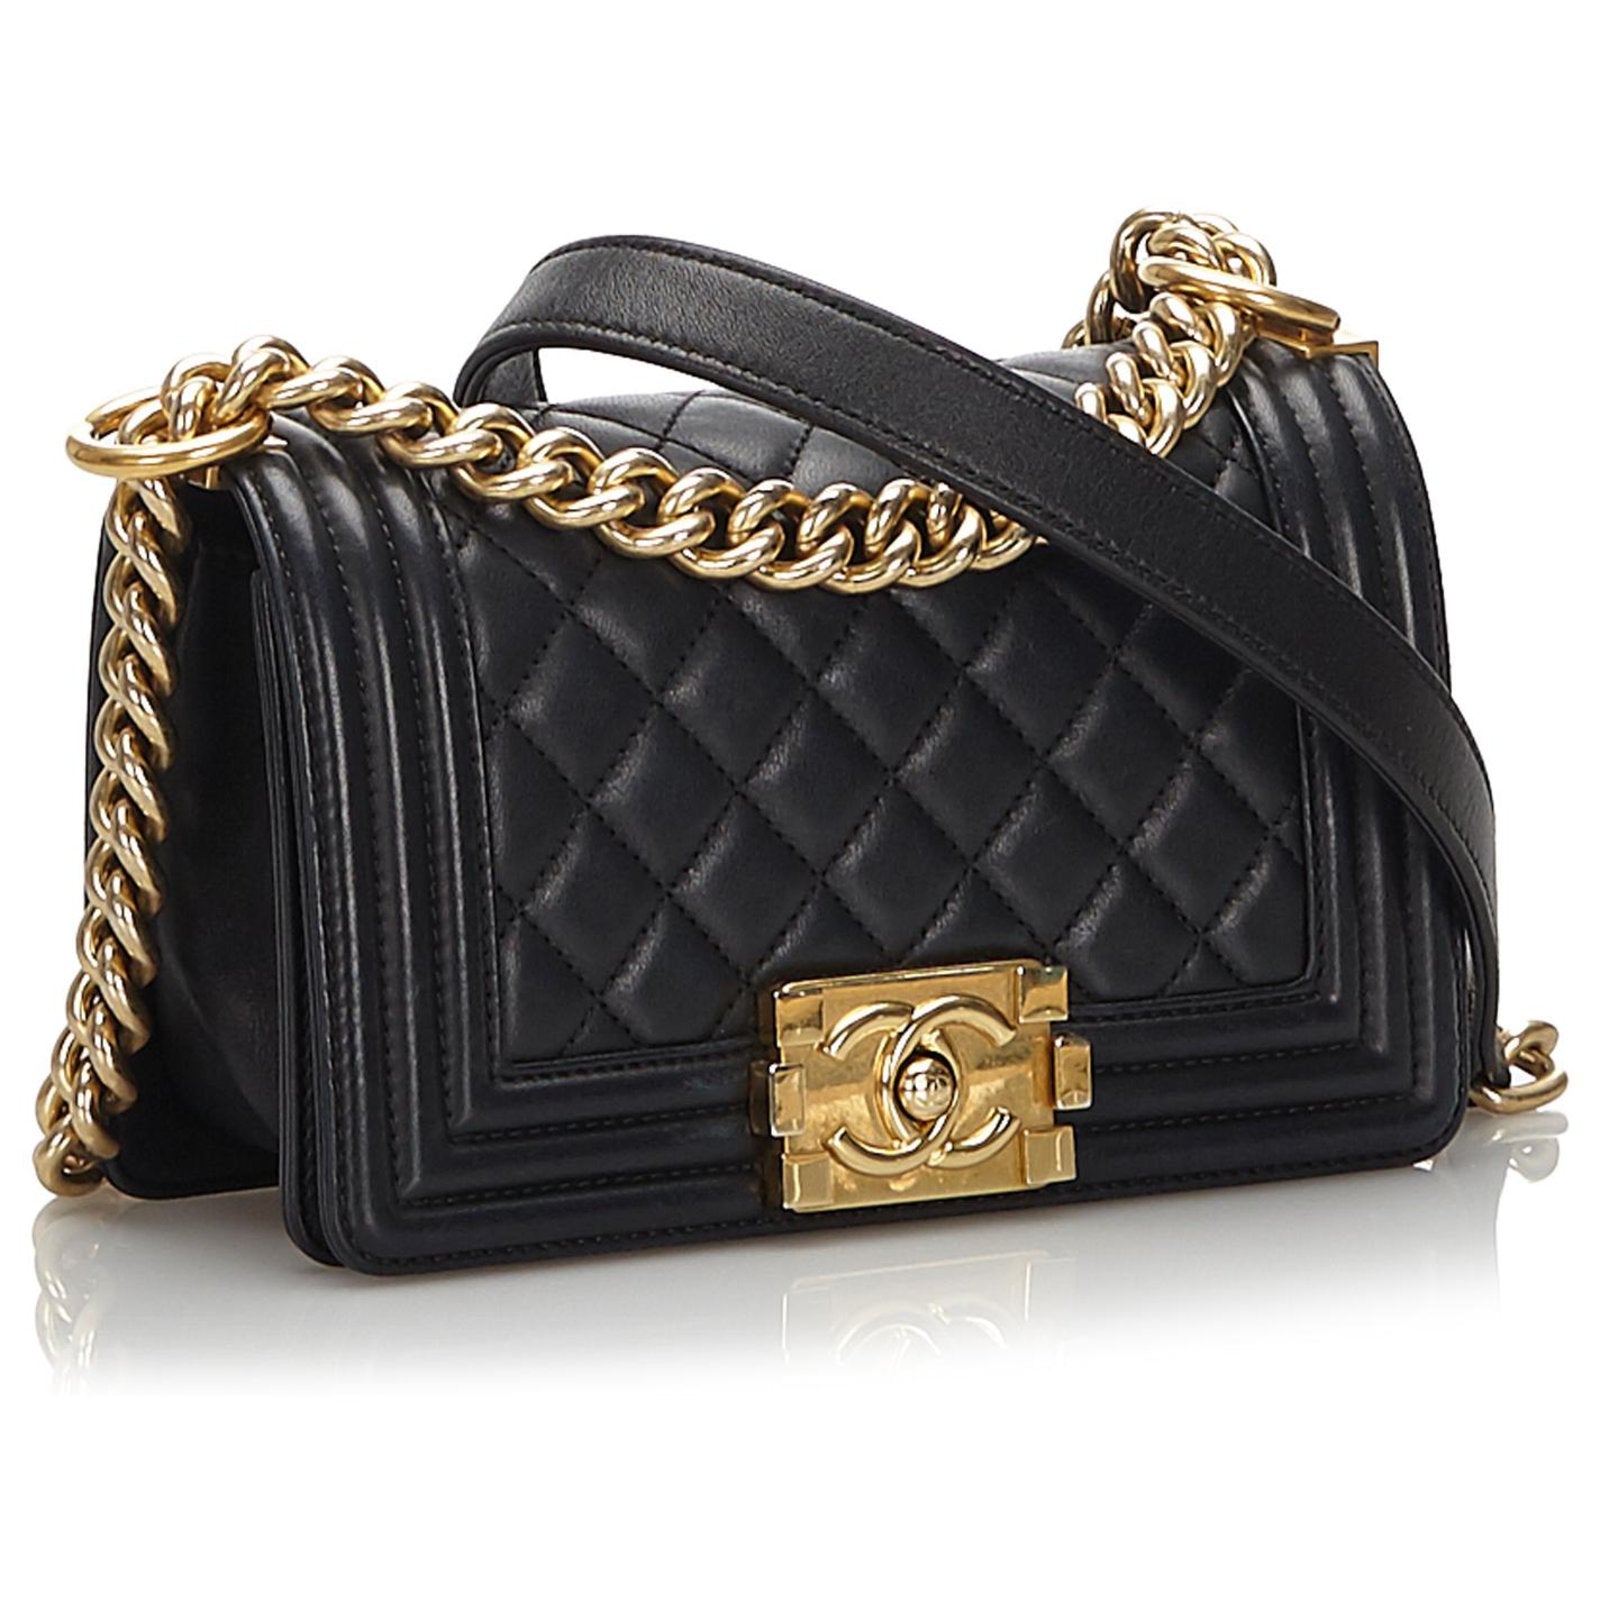 Chanel Small Boy Handbag Black